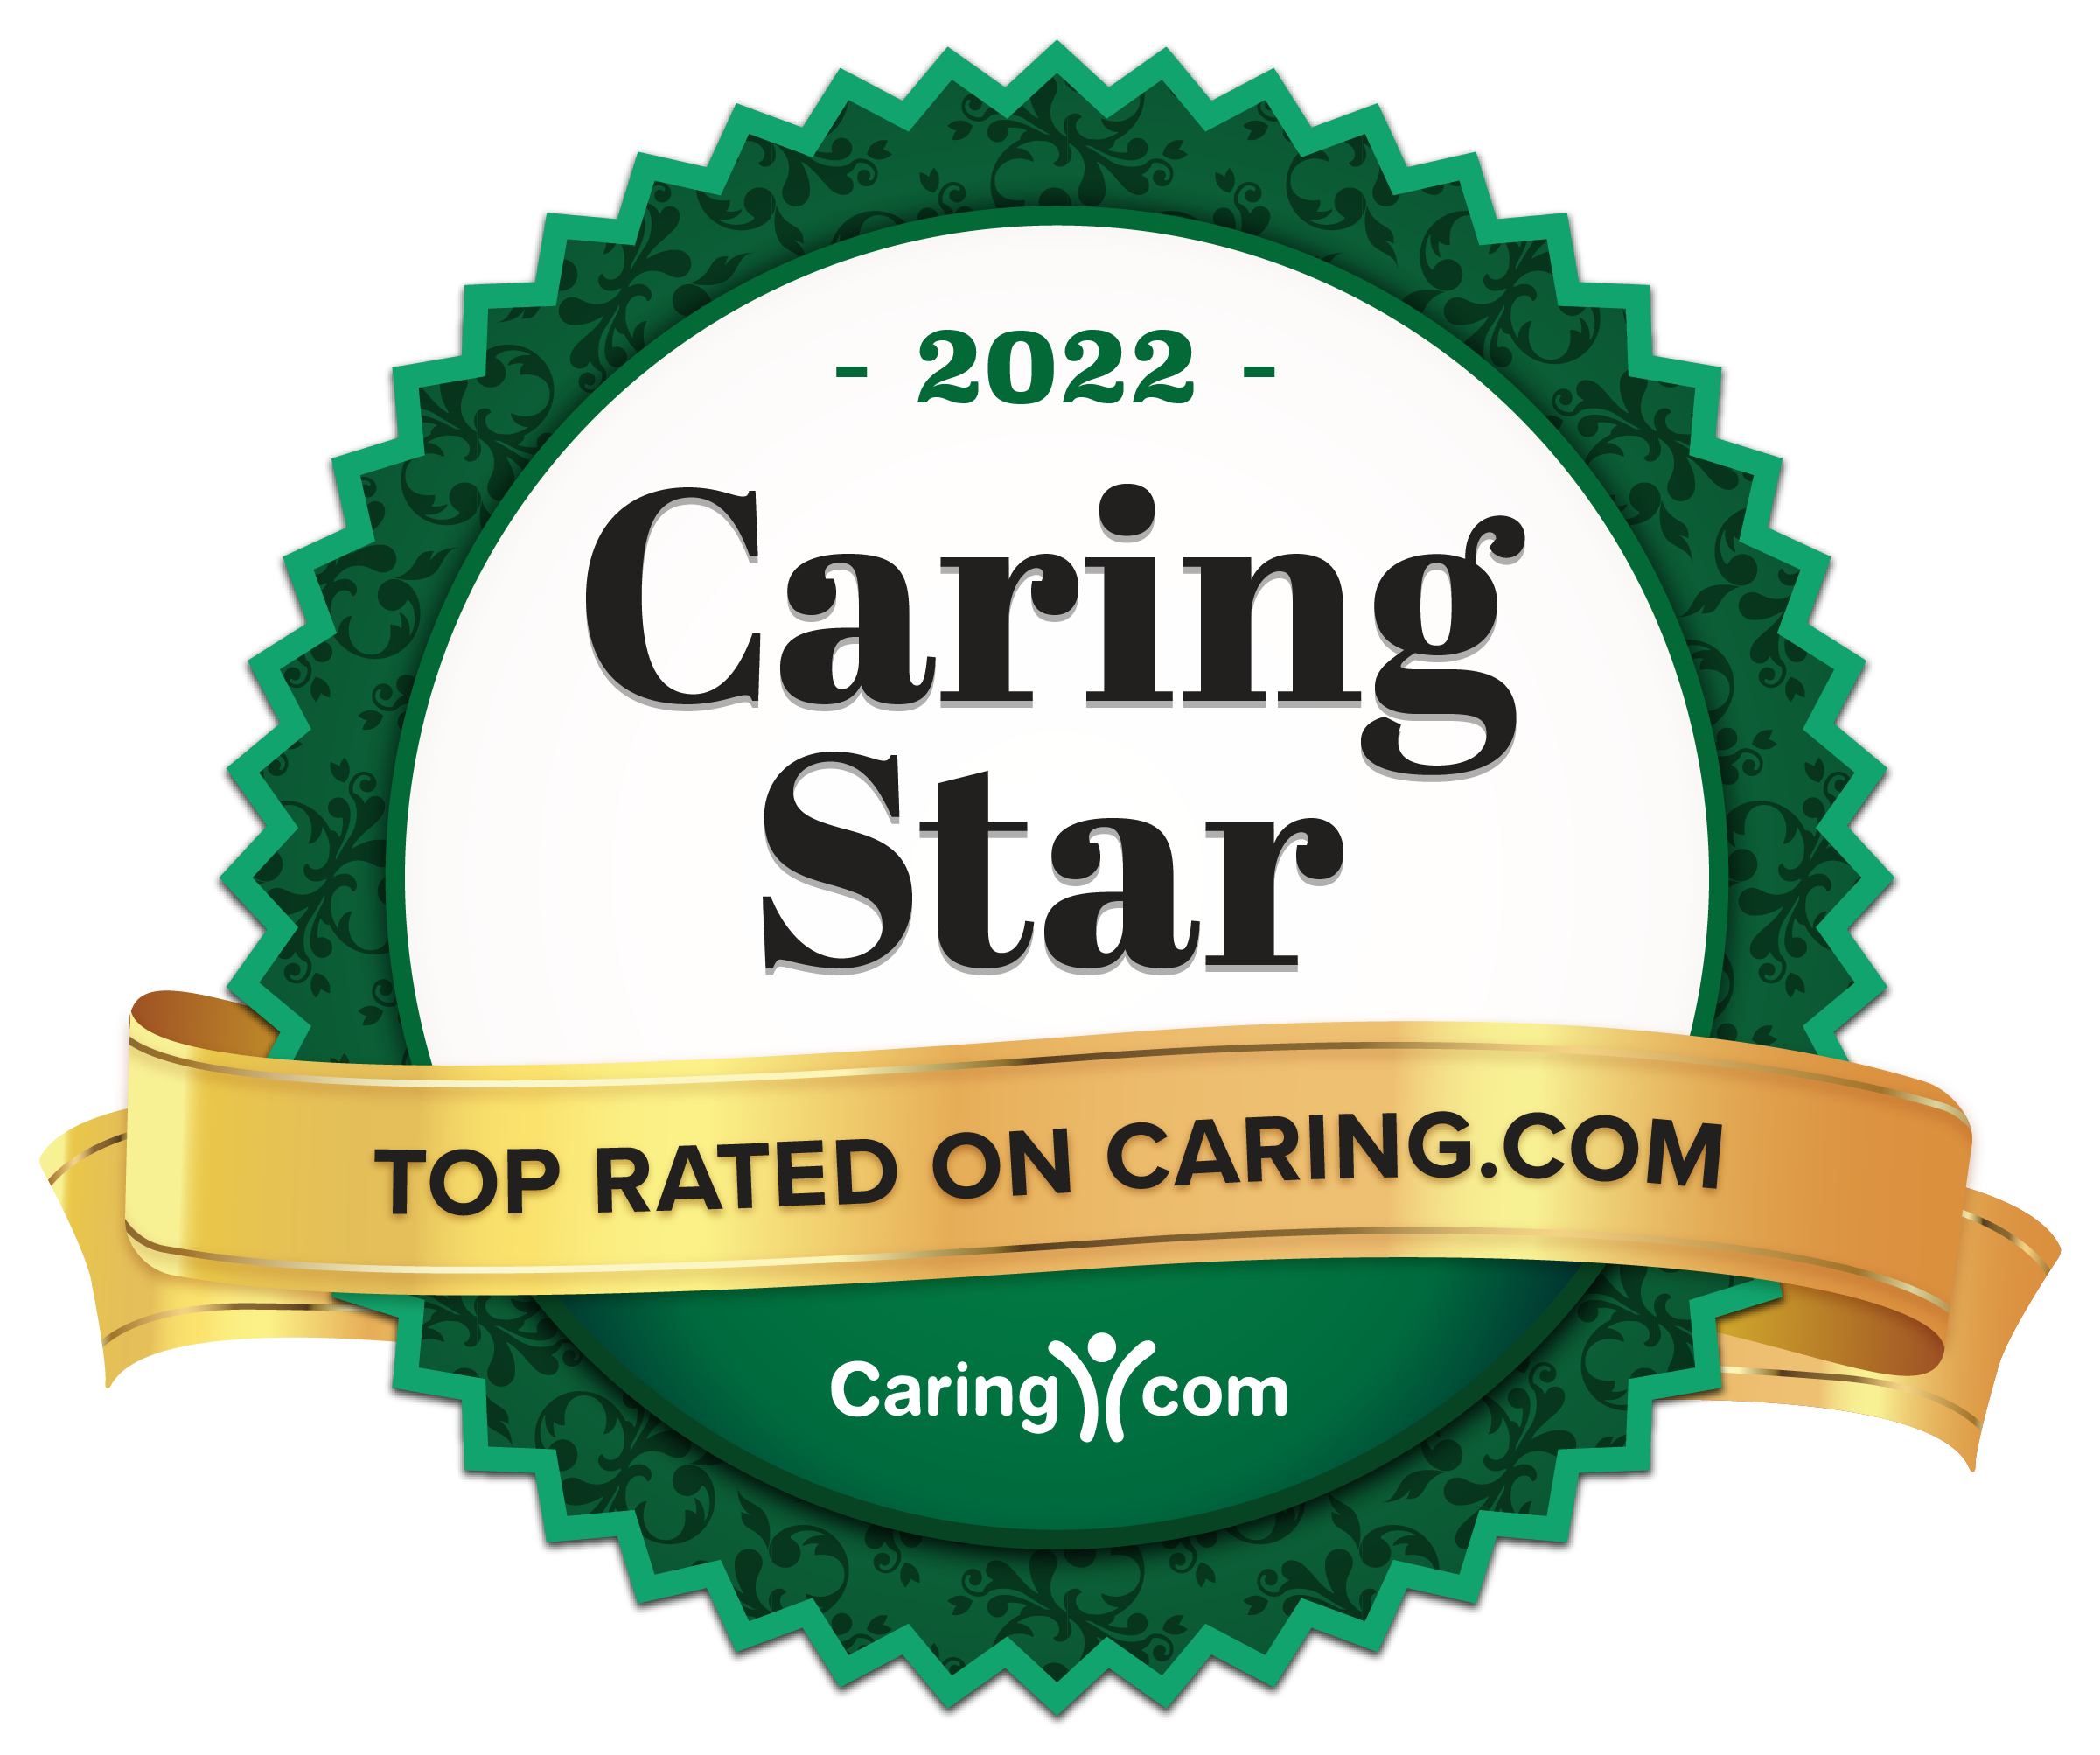 2022 Caring Star logo